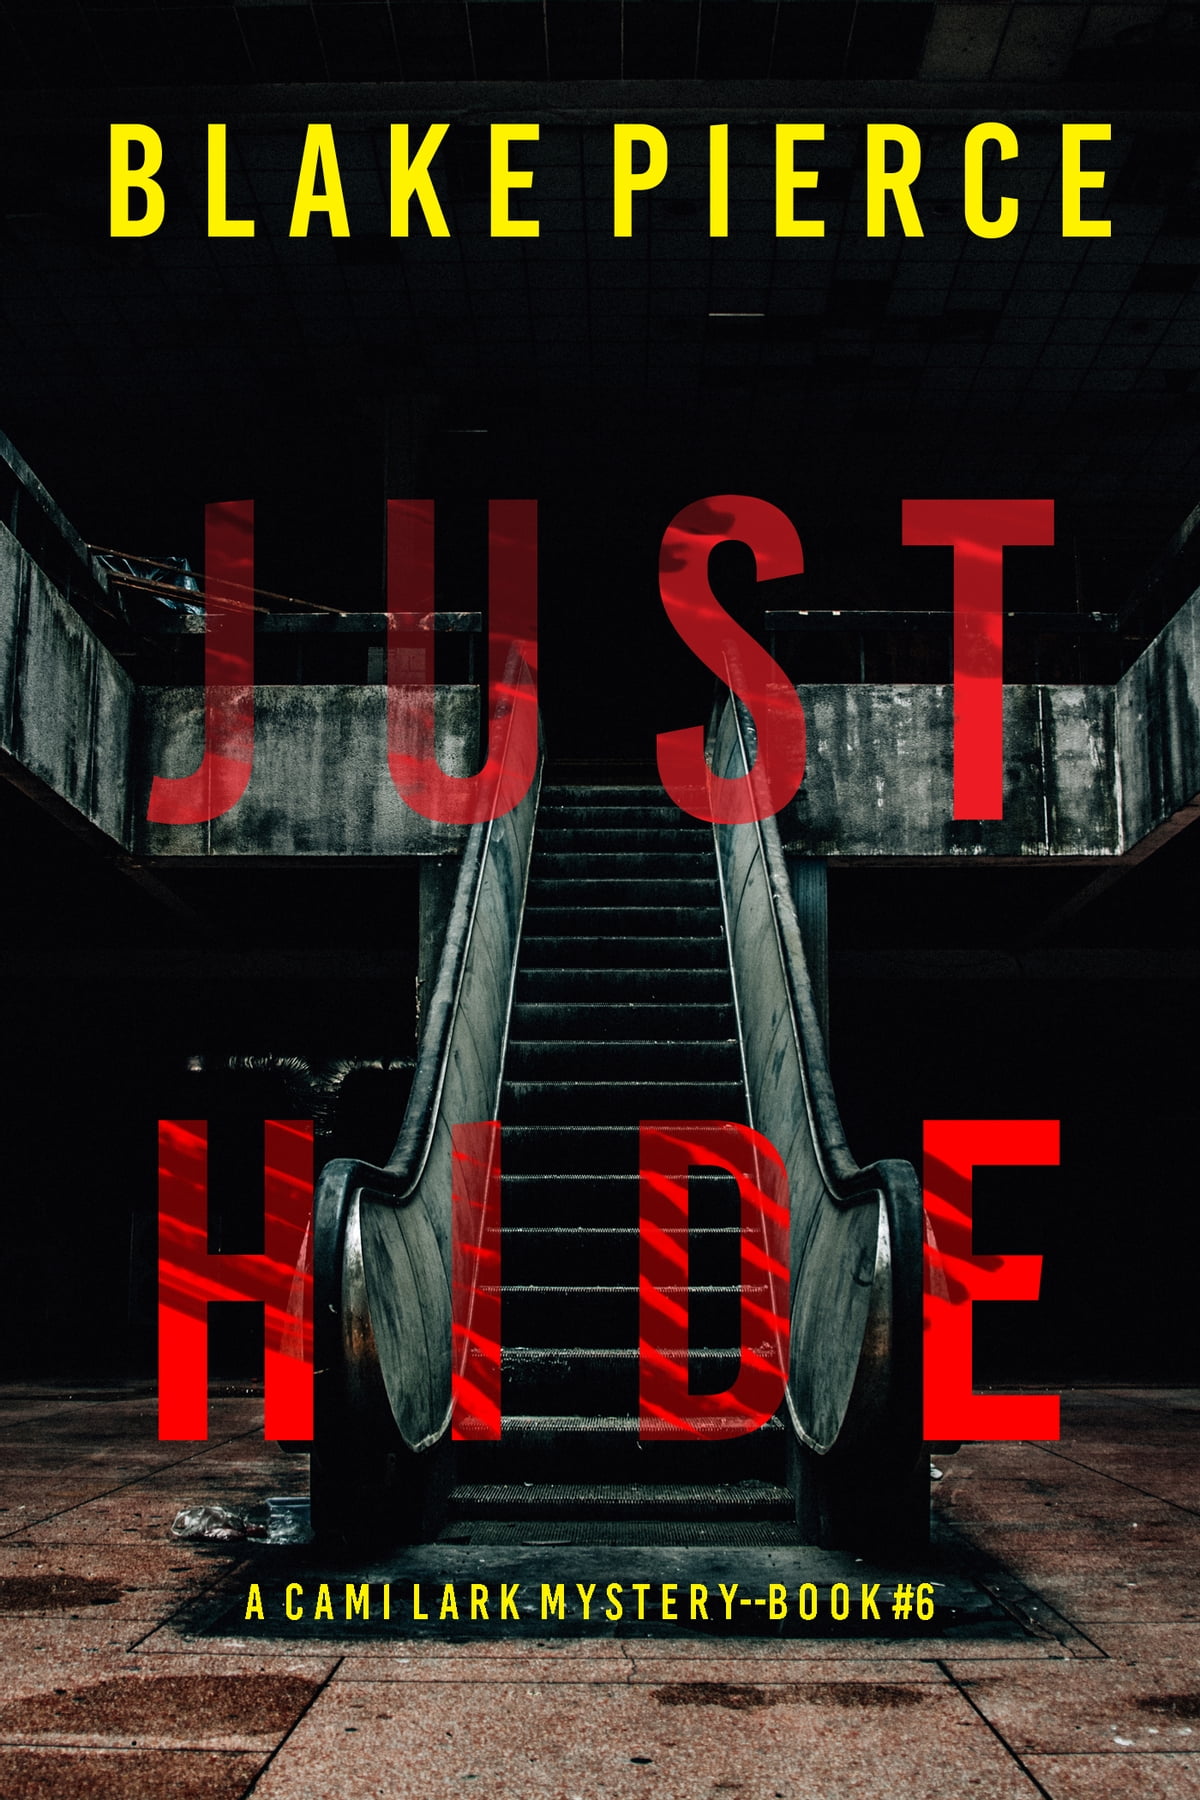 Just Hide by Blake Pierce PDF Download Video Library